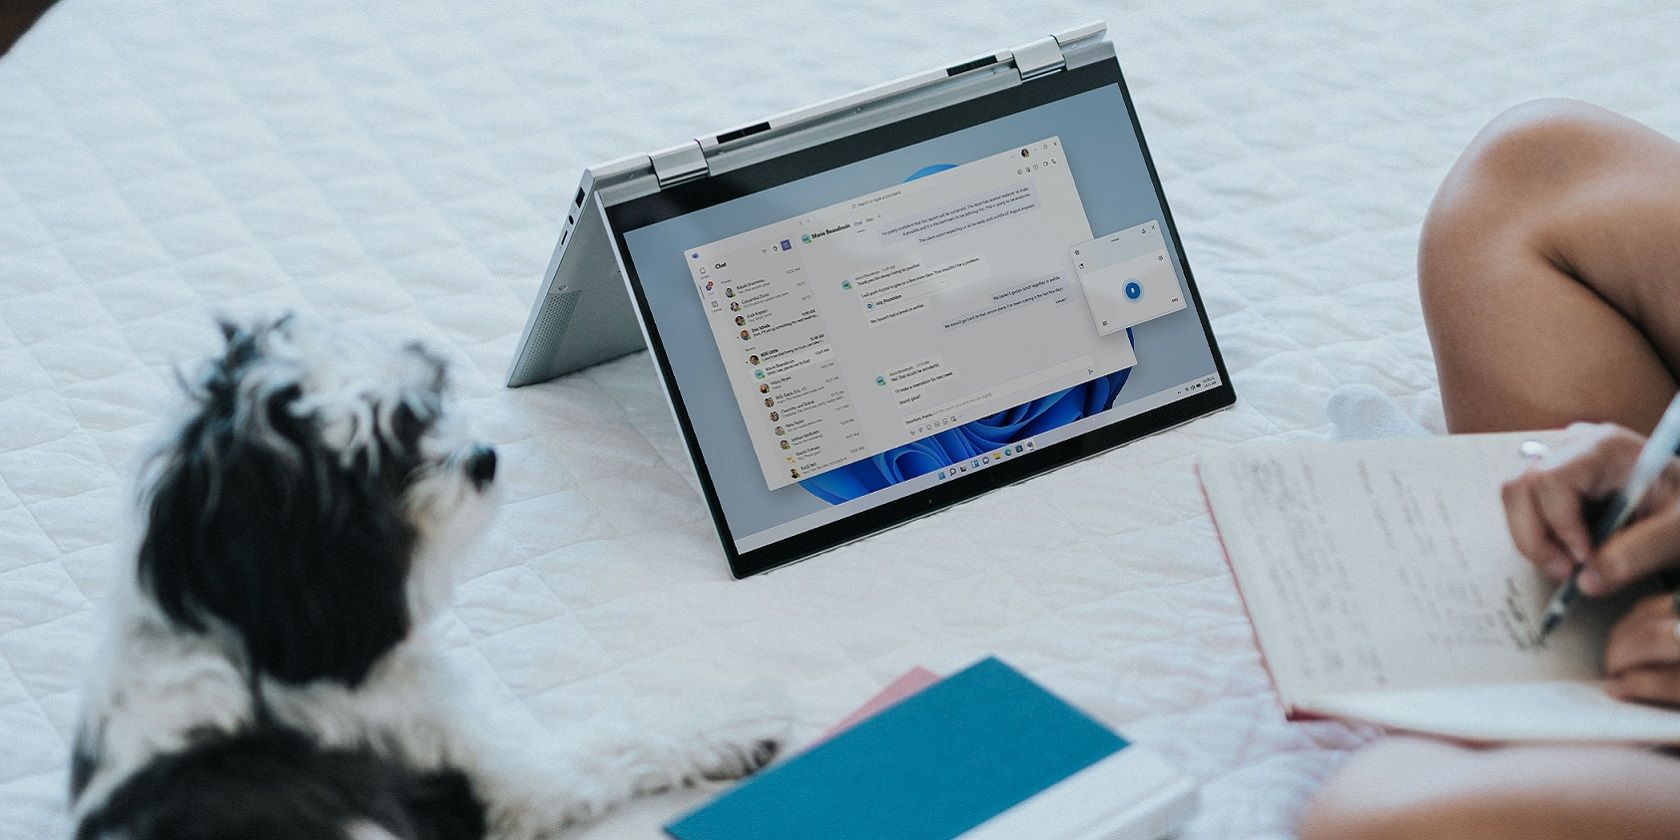 A Windows 11 2-in-1laptop/tablet